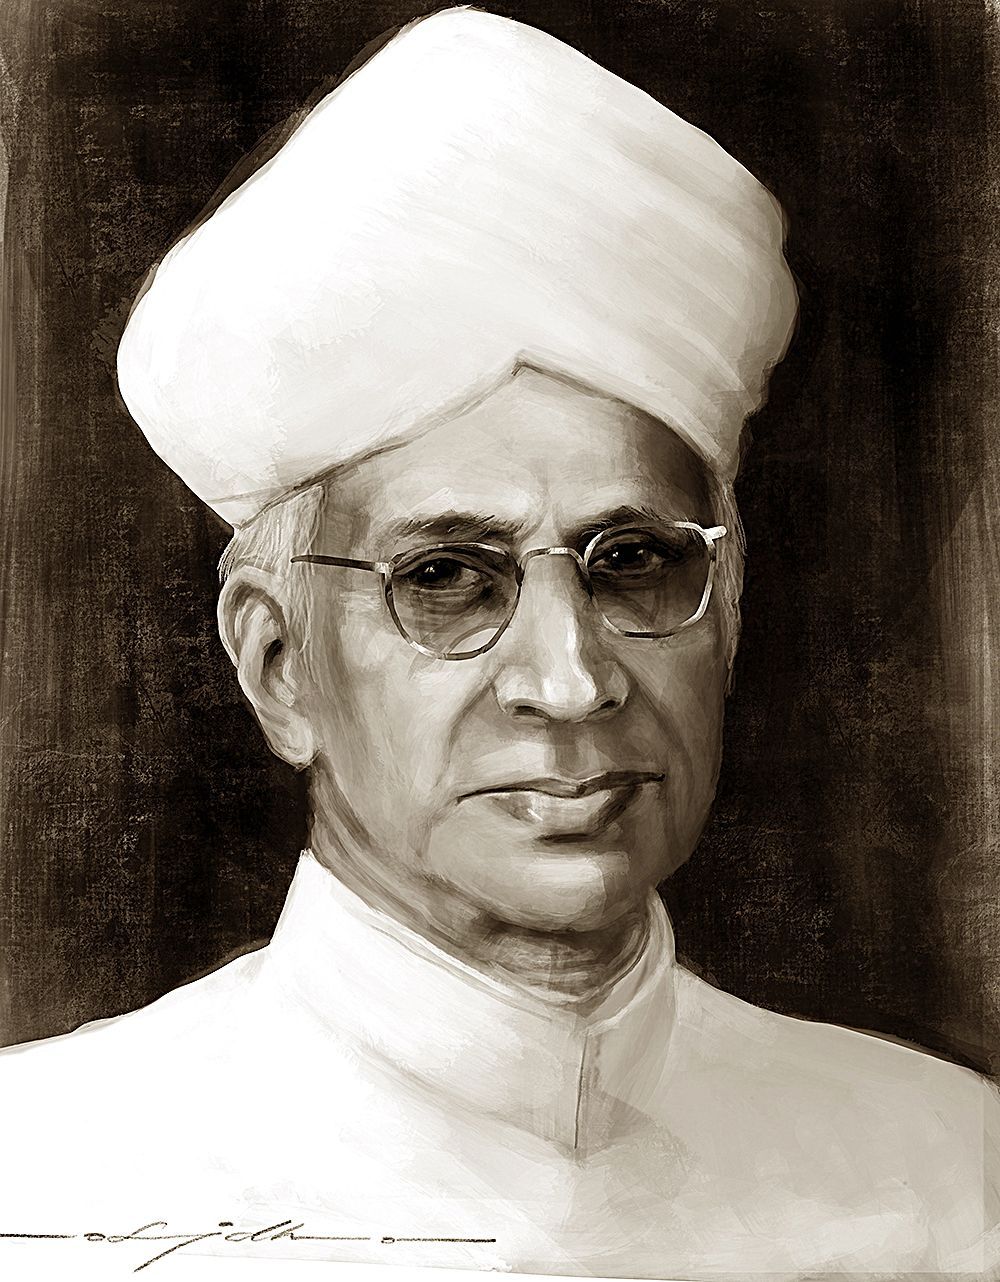 Dr. Sarvepalli Radhakrishnan by Suraj Dhar. Historical figures